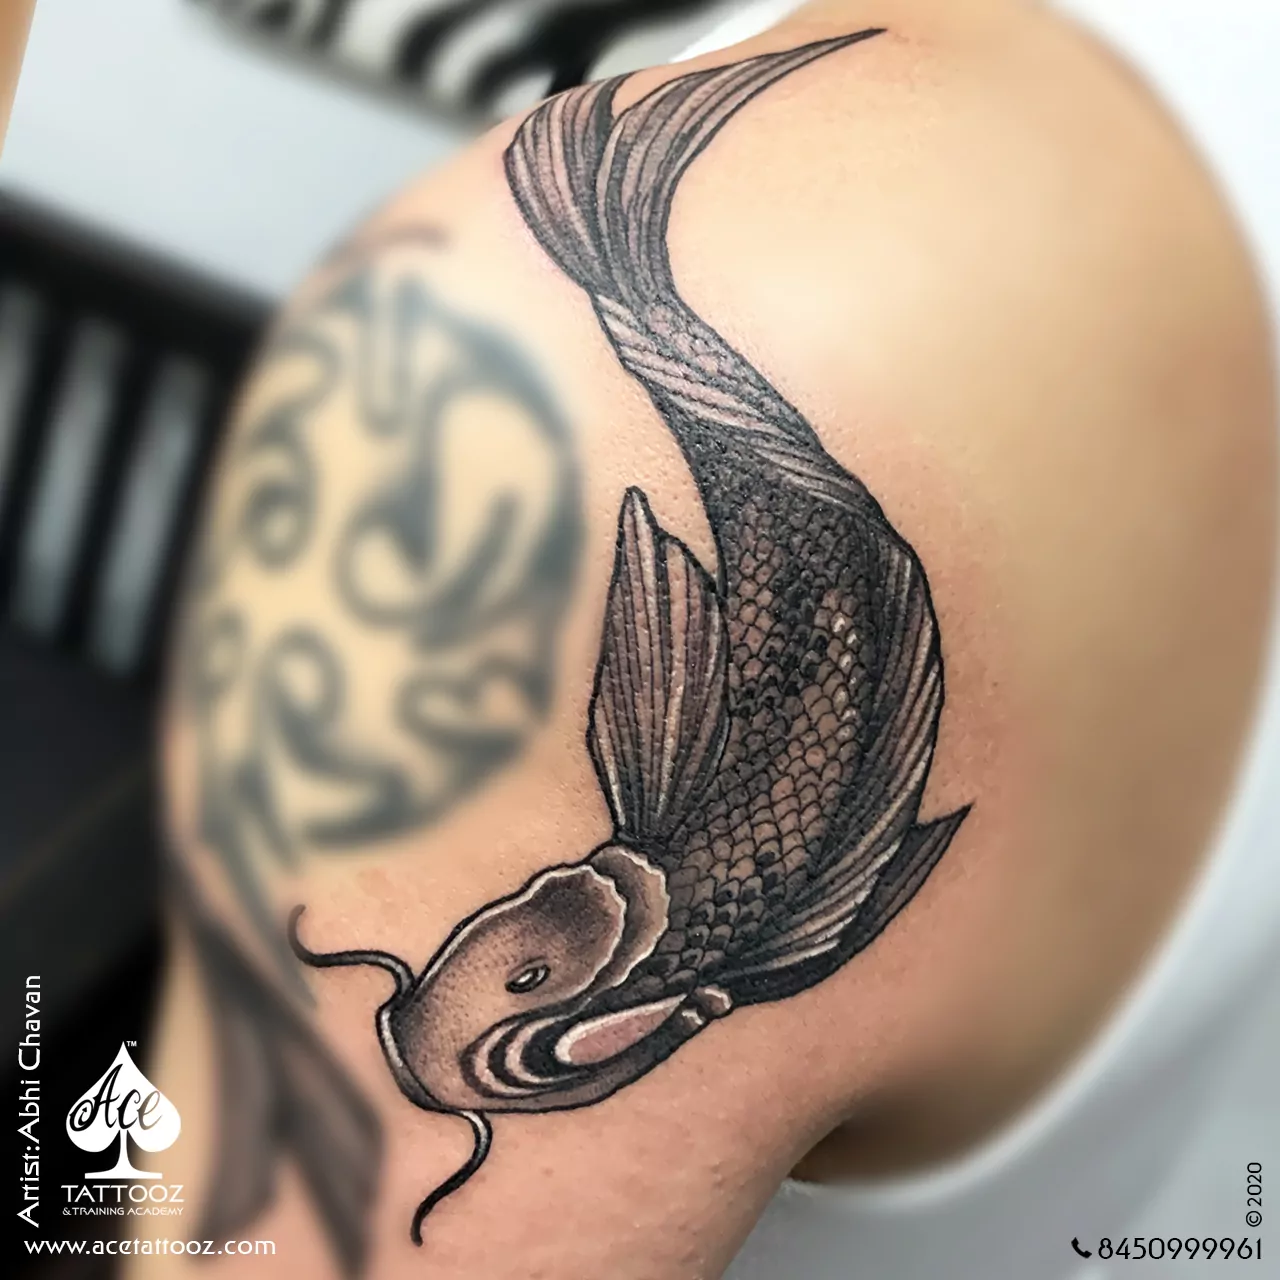 Black & White Koi Fish Tattoo - Ace Tattooz